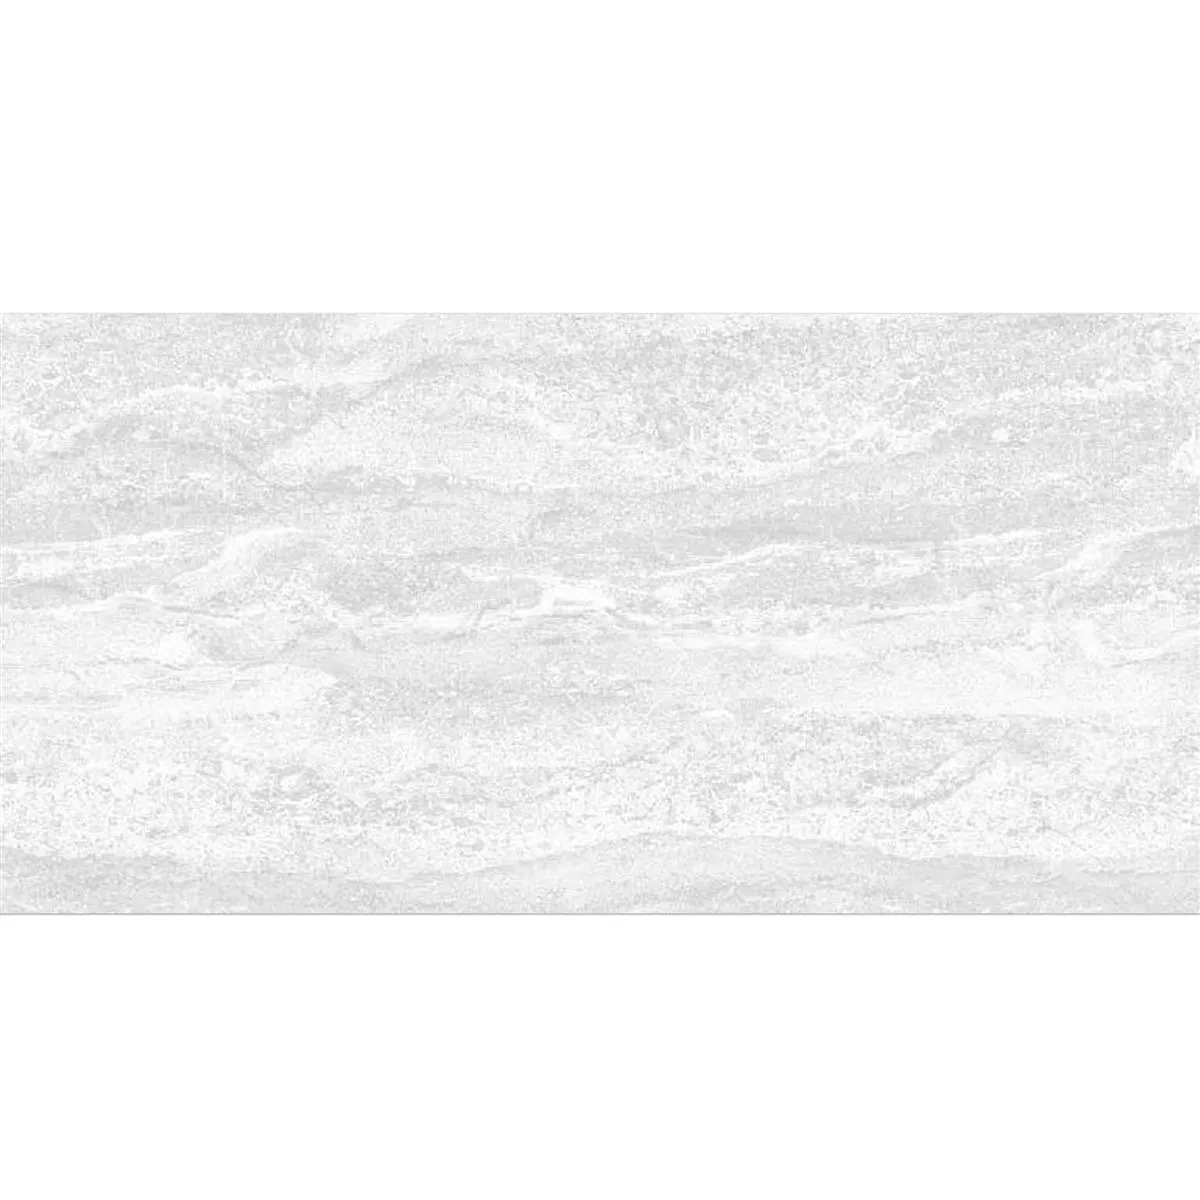 Sample Wall Tiles Bellinzona White Structured 30x60cm